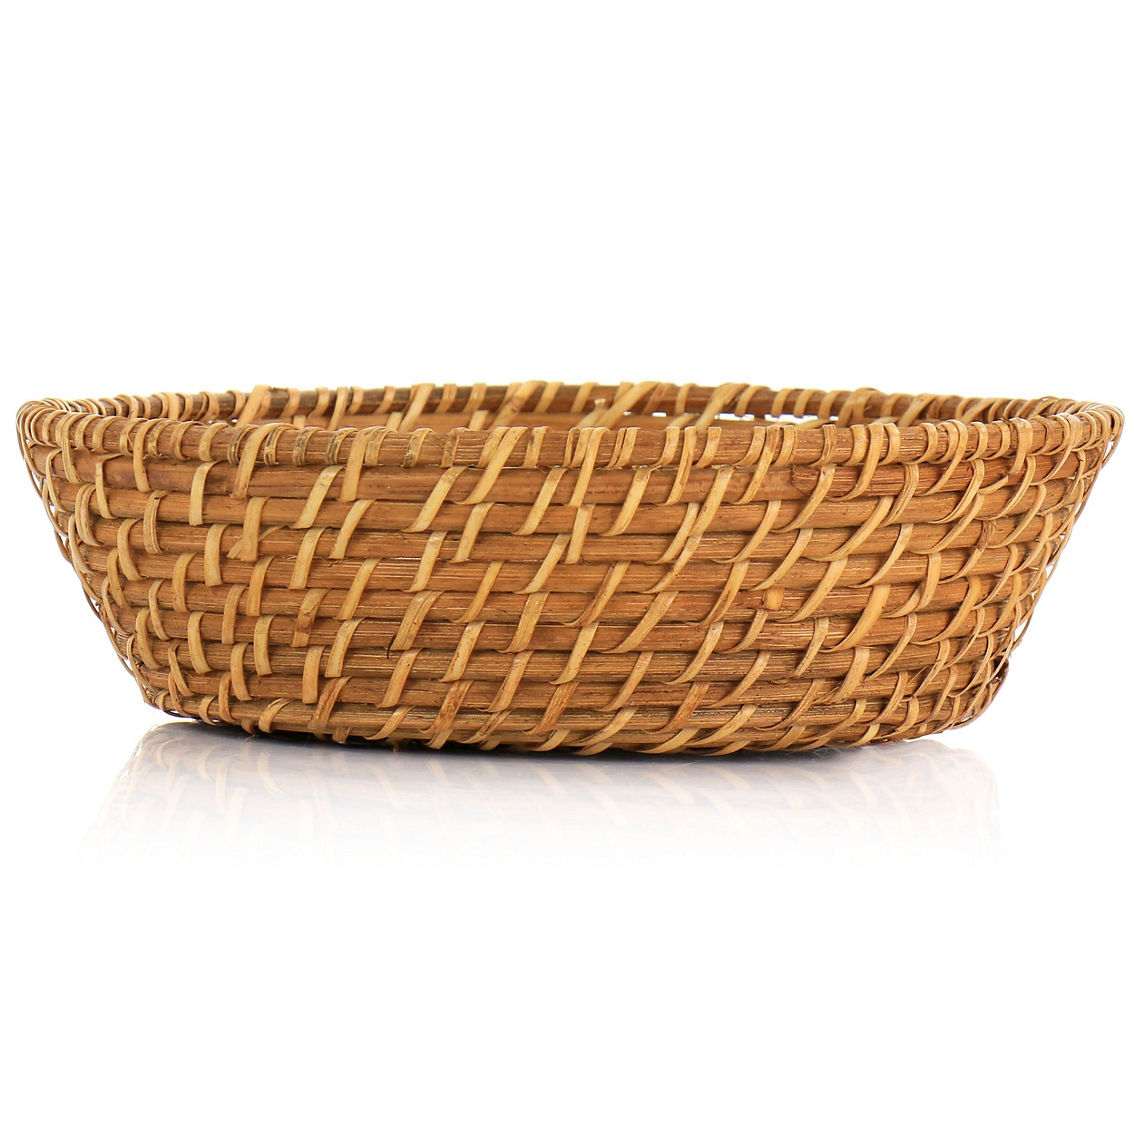 Martha Stewart 9 Inch Rattan Woven Loaf Basket in Brown - Image 2 of 5